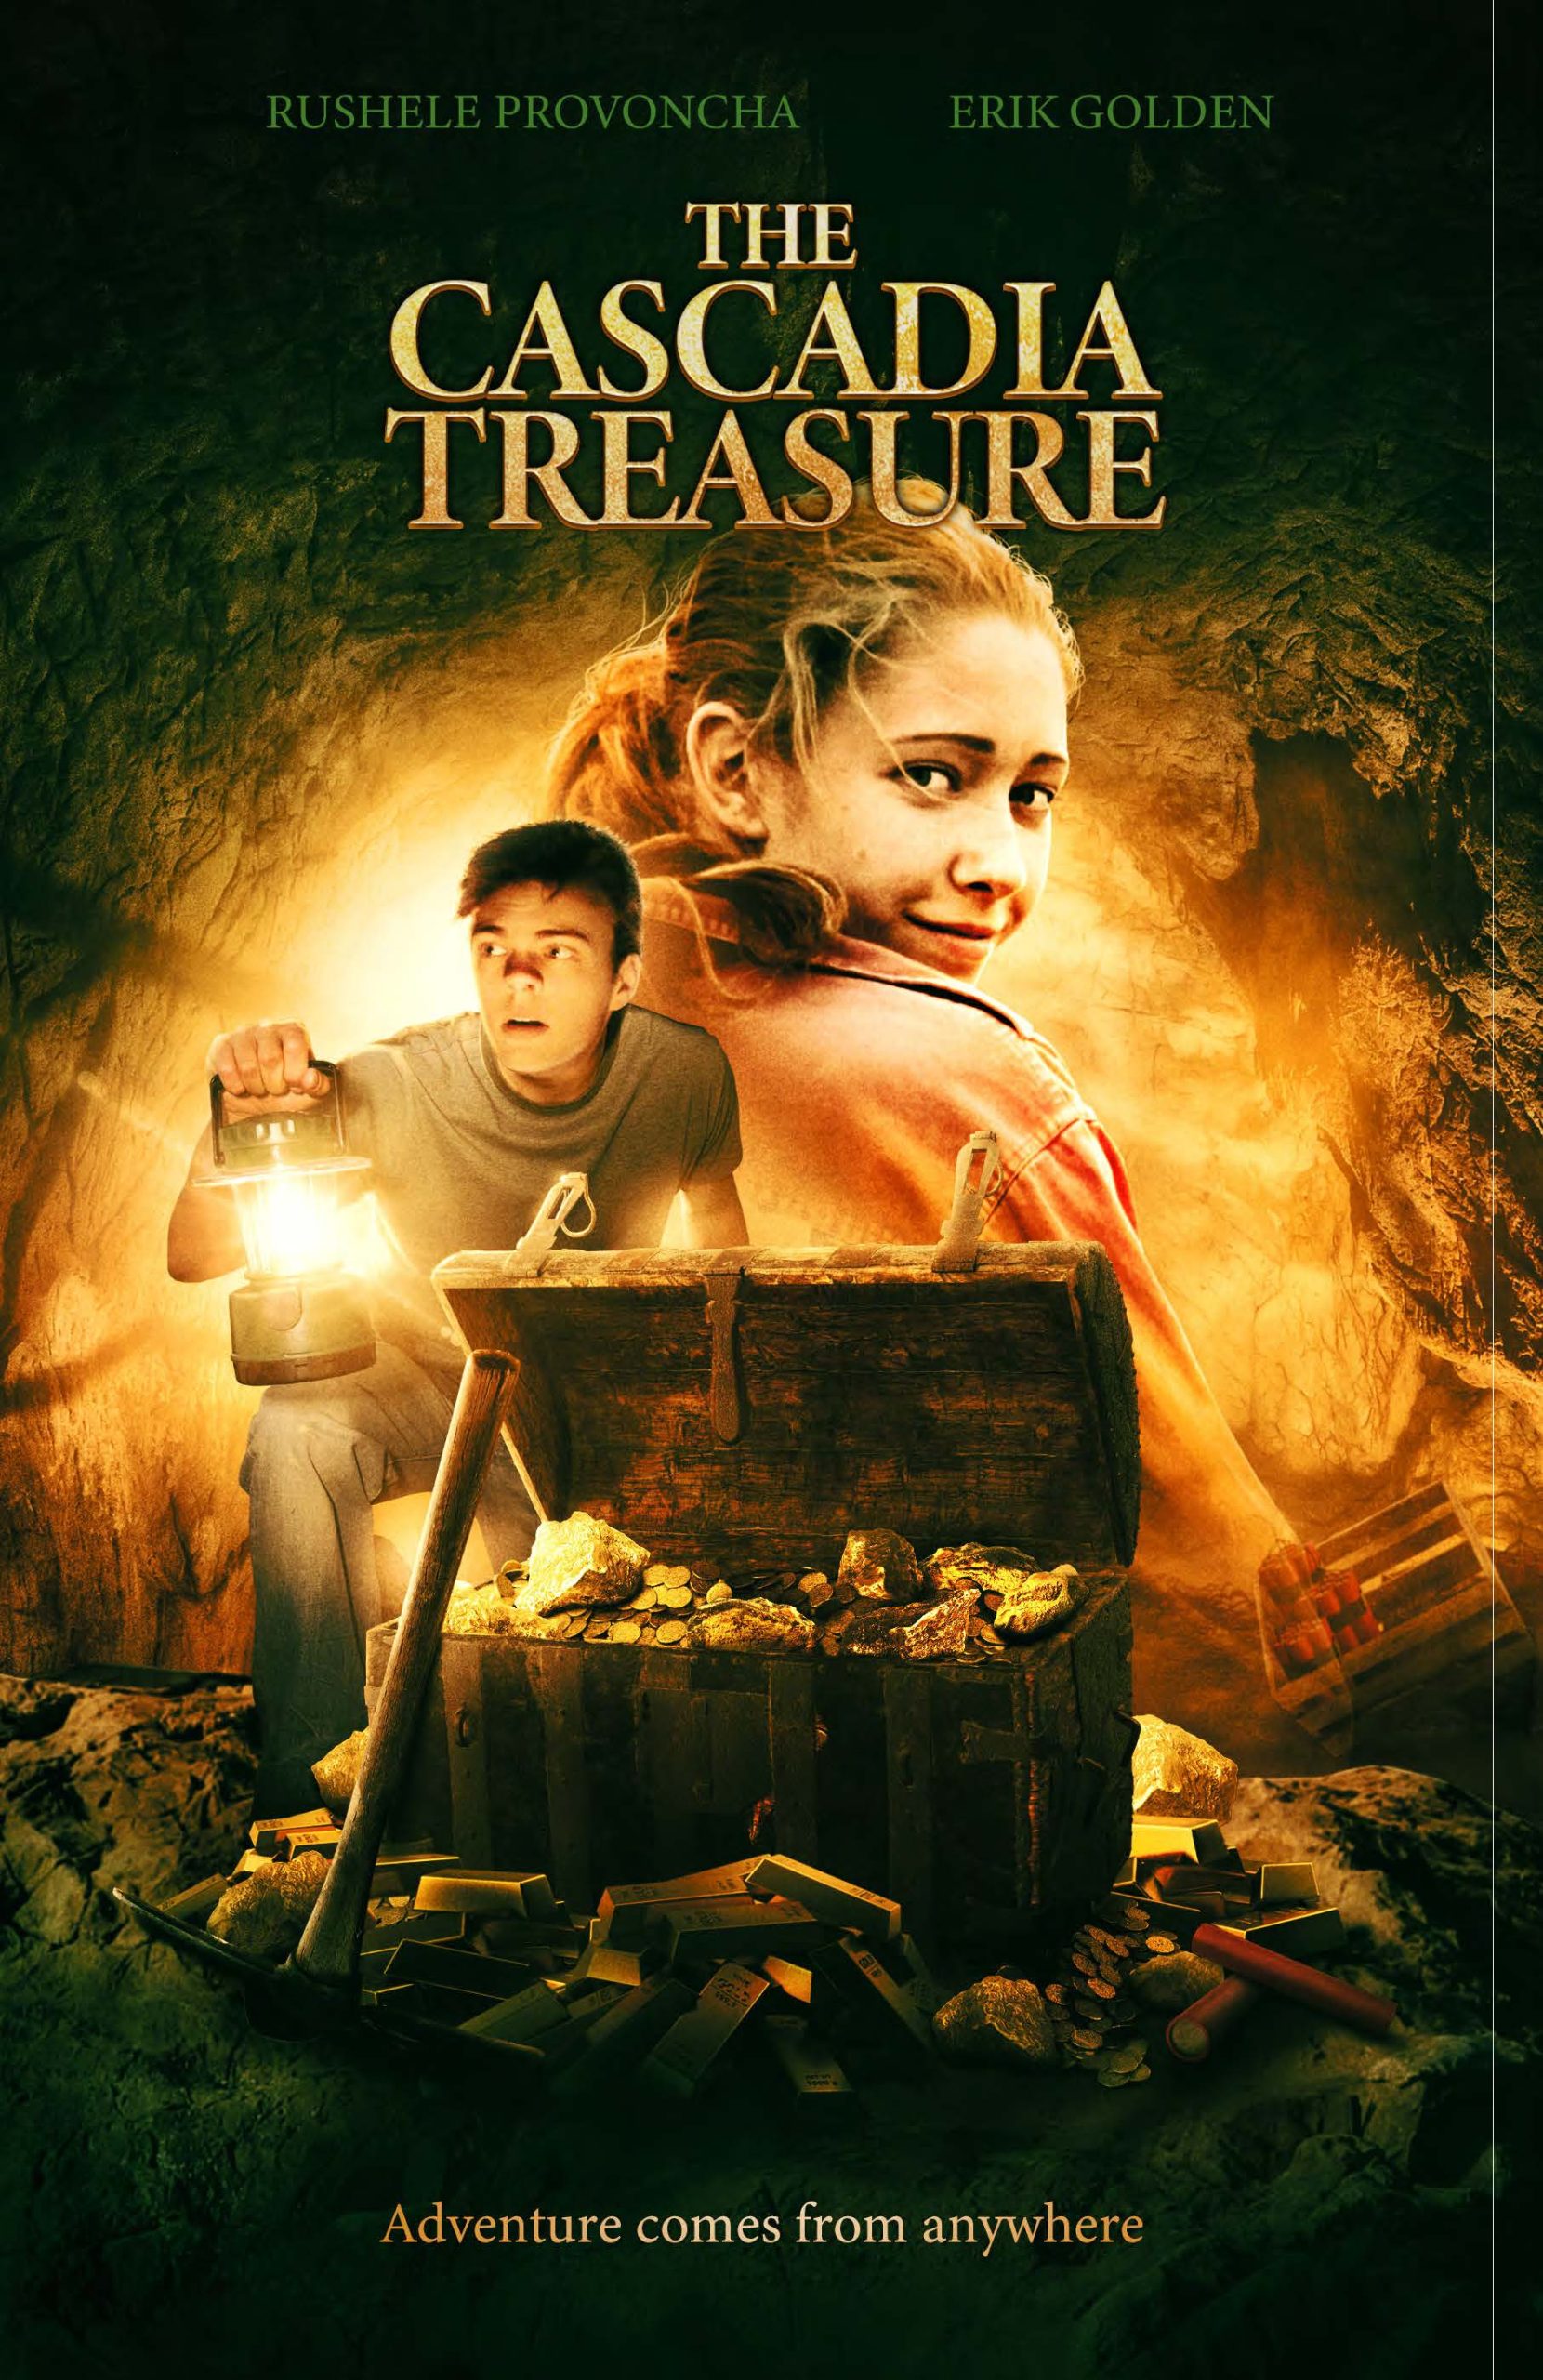 The Cascadia Treasure 2020 18452 Poster.jpg